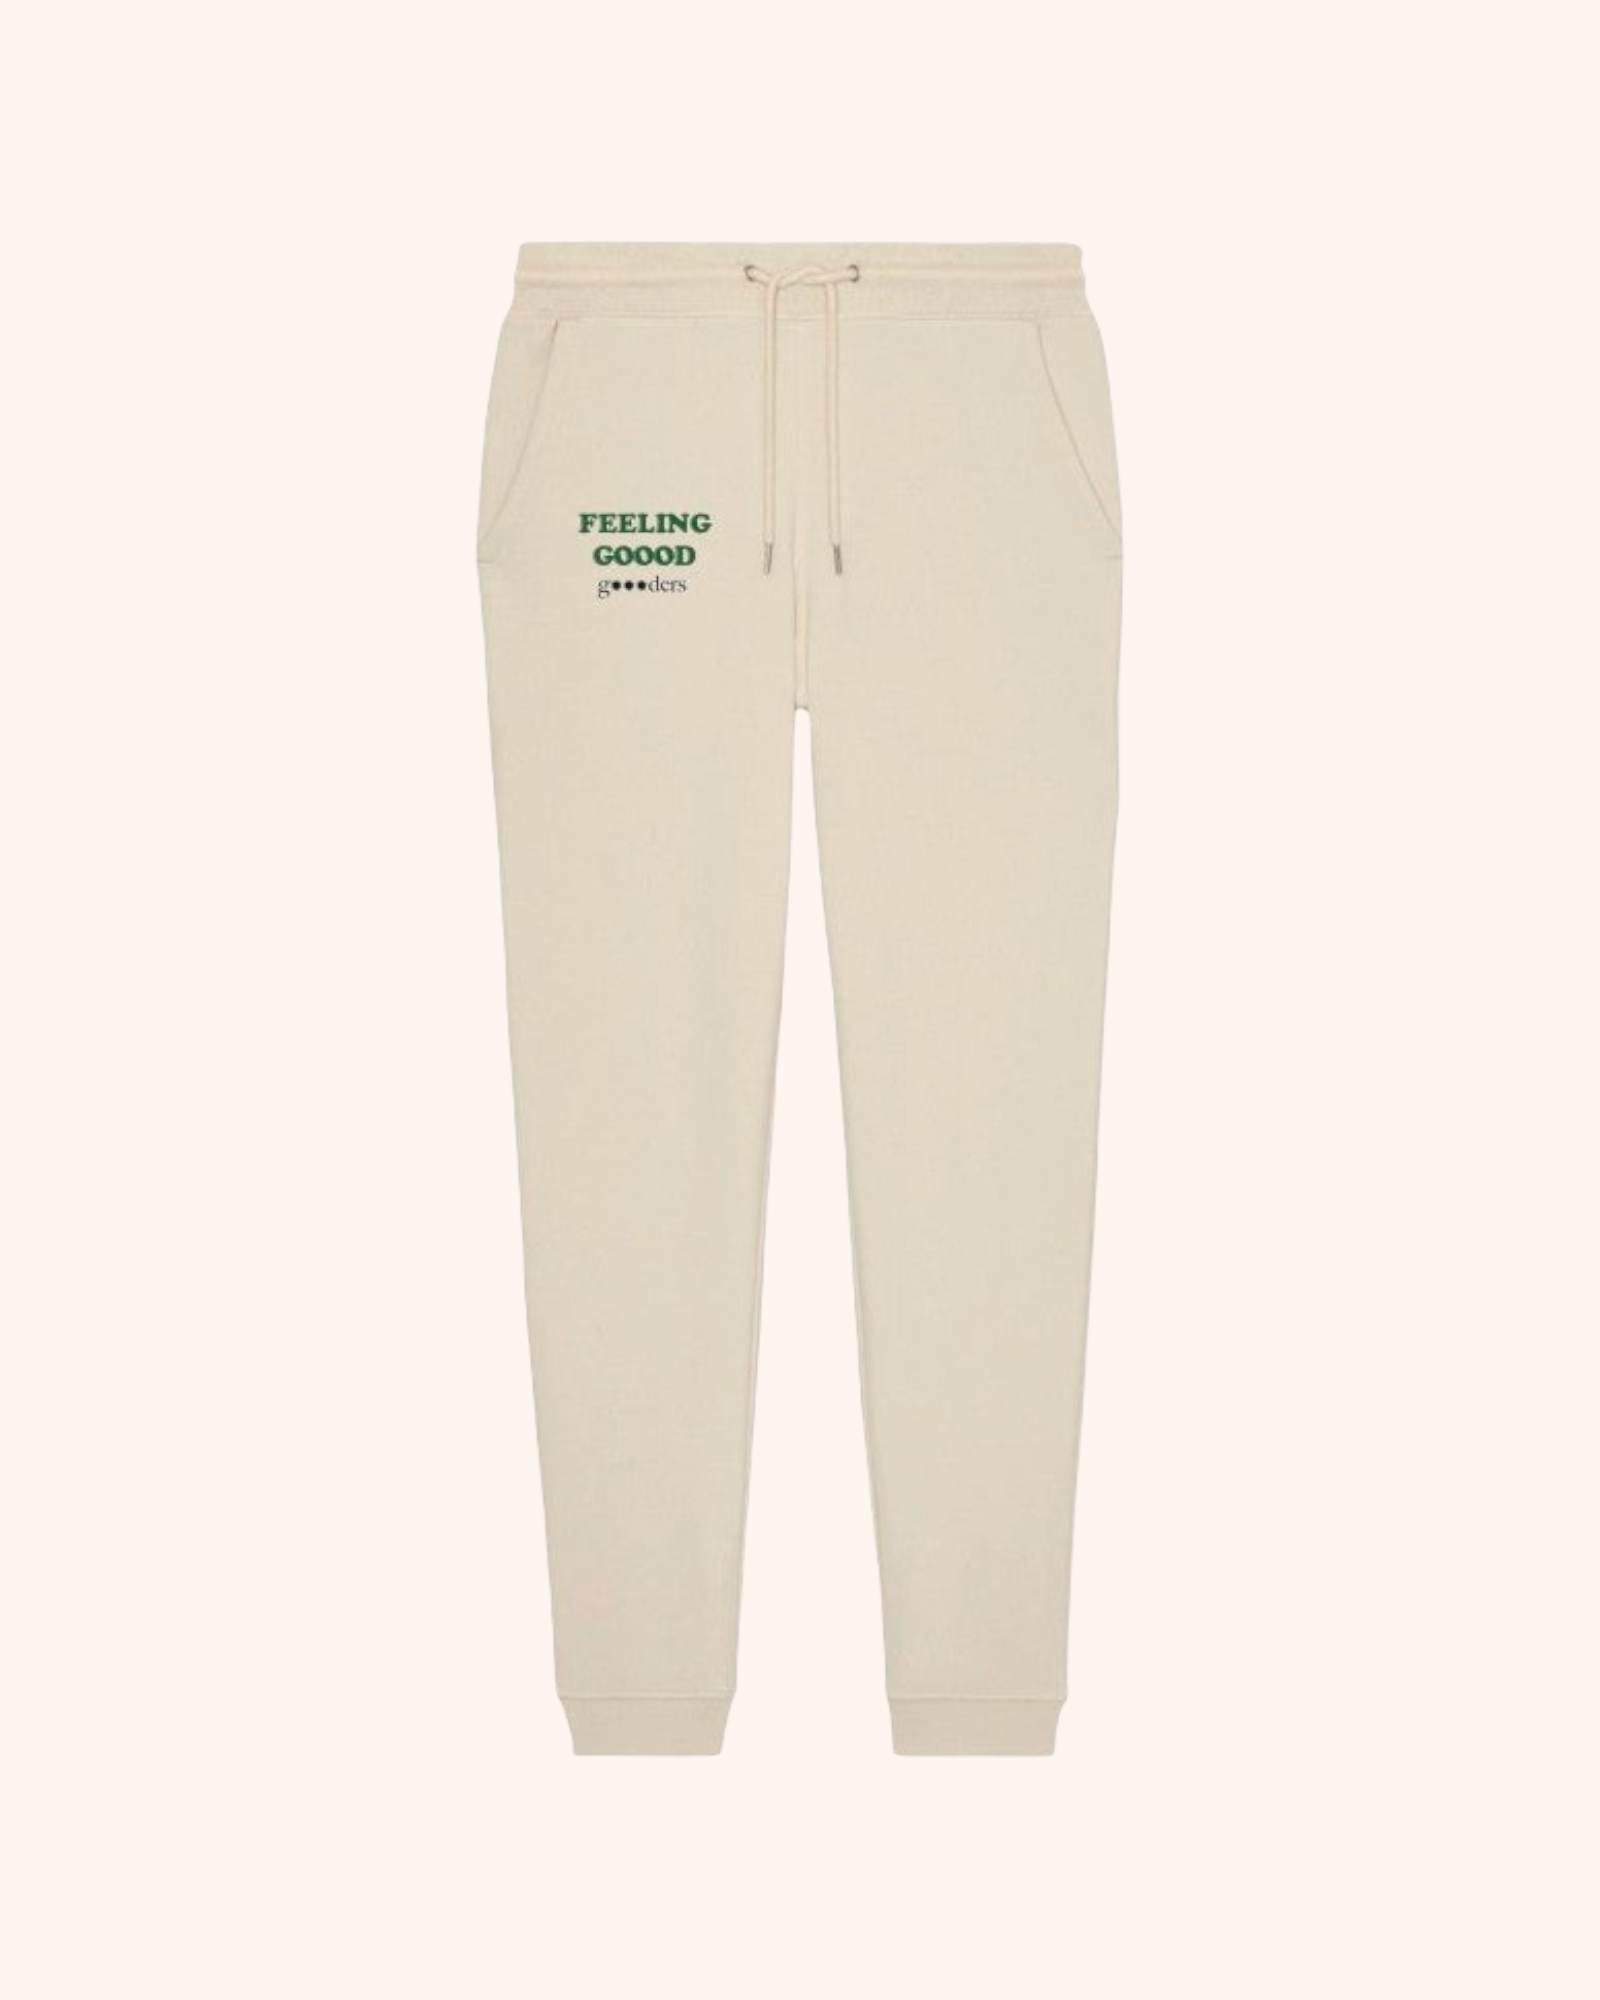 Feeling Goood Organic Cotton Pants - Cream – Goooders